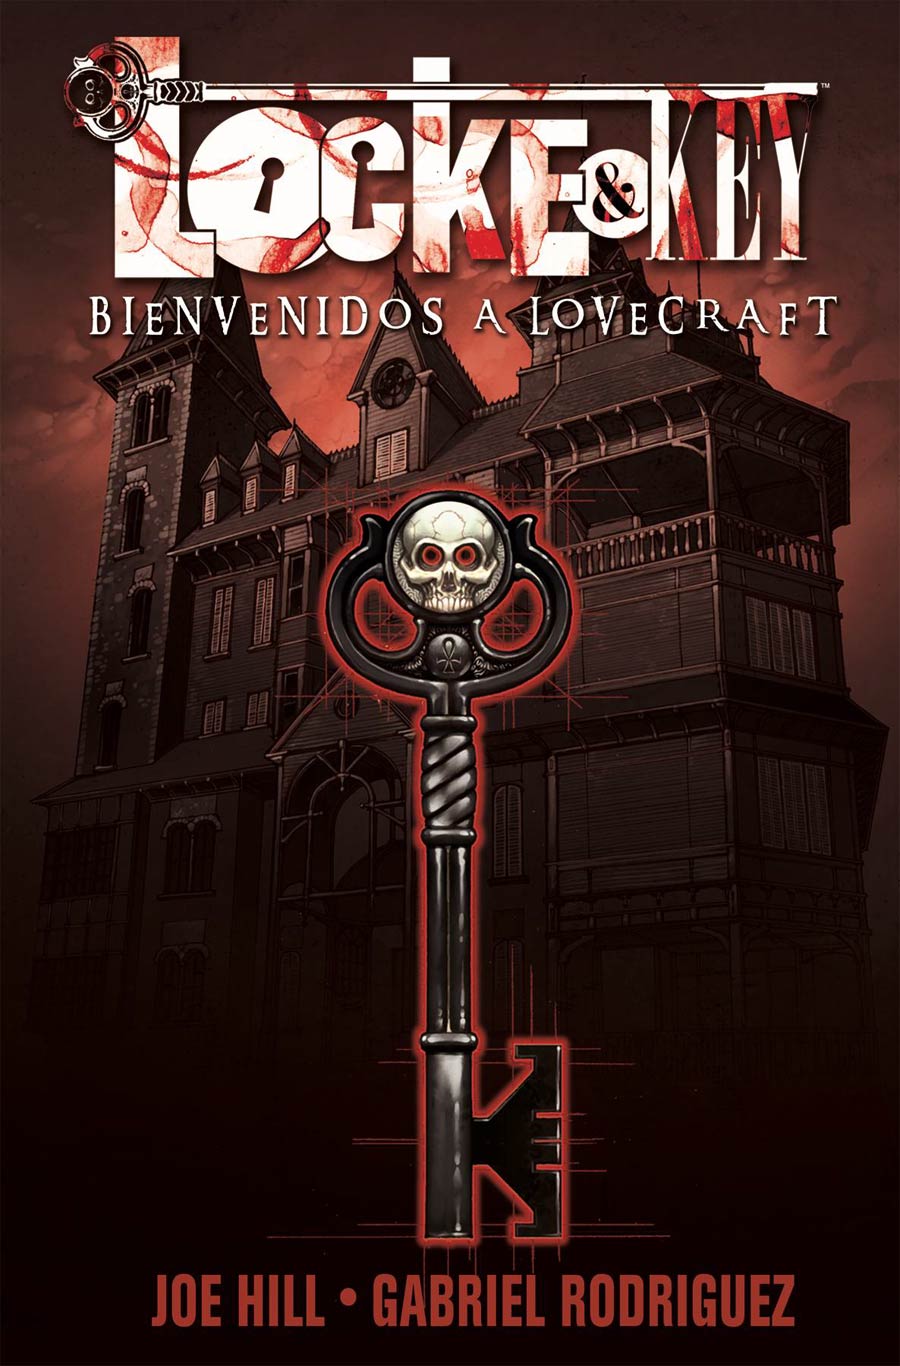 Locke & Key Vol 1 Bienvenidos A Lovecraft (Locke & Key Vol 1 Welcome To Lovecraft Spanish Edition) TP